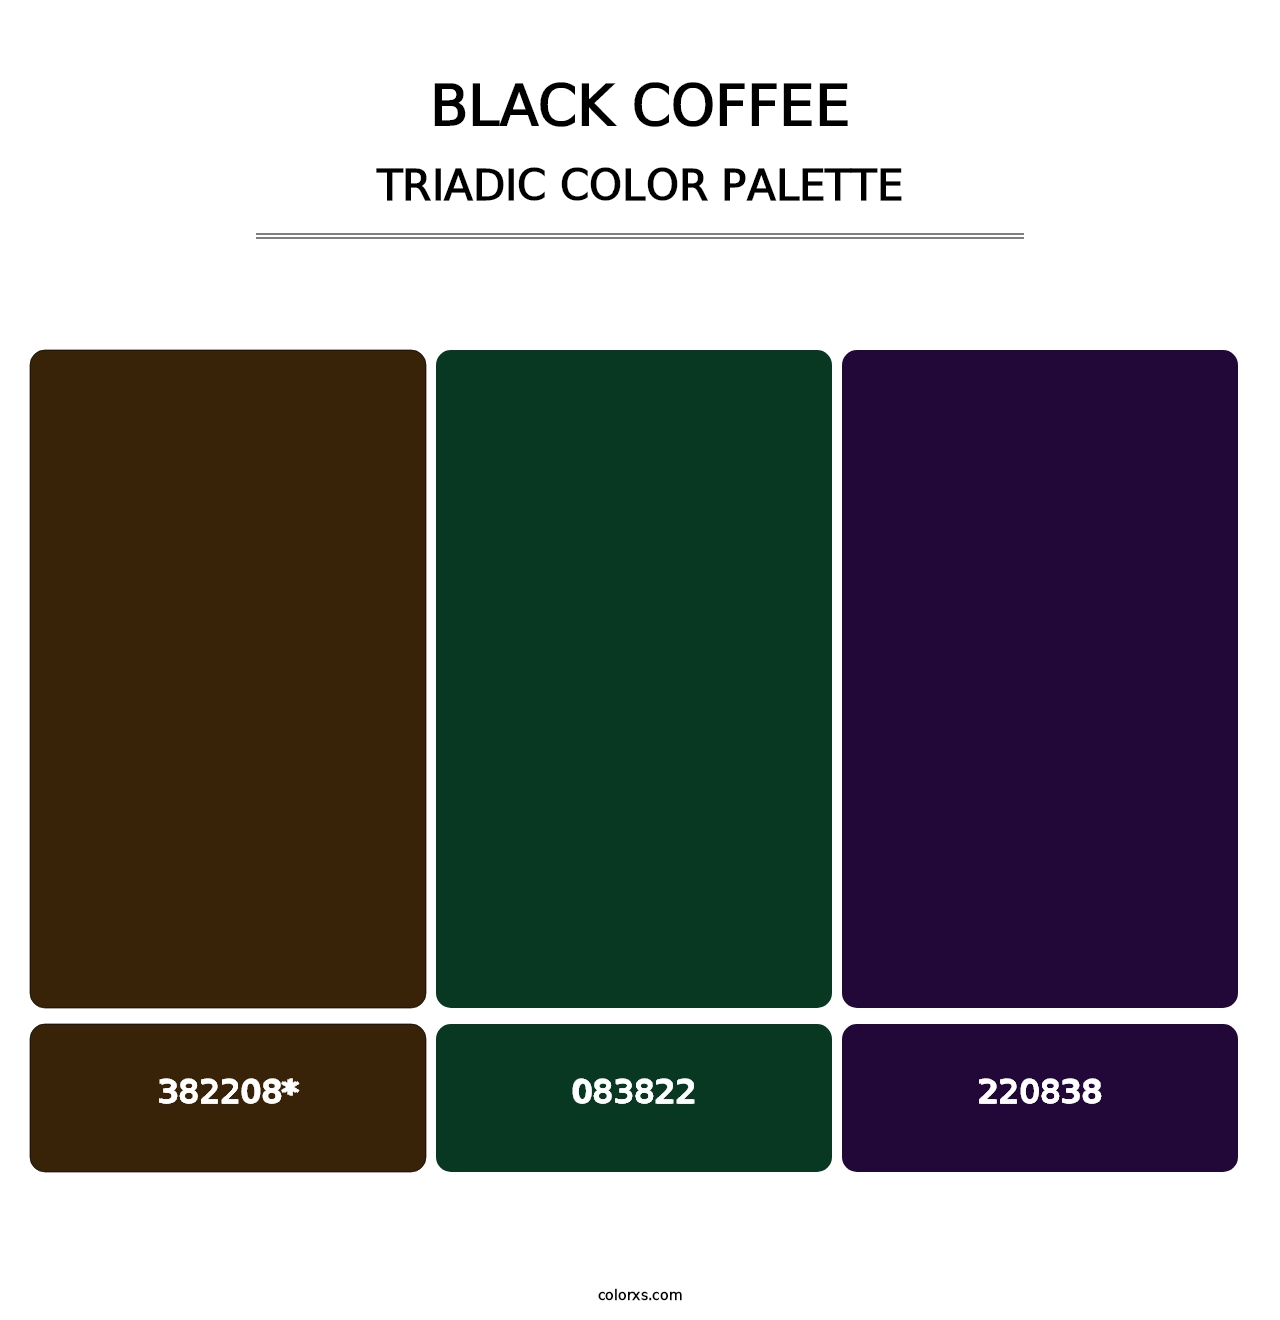 Black Coffee - Triadic Color Palette